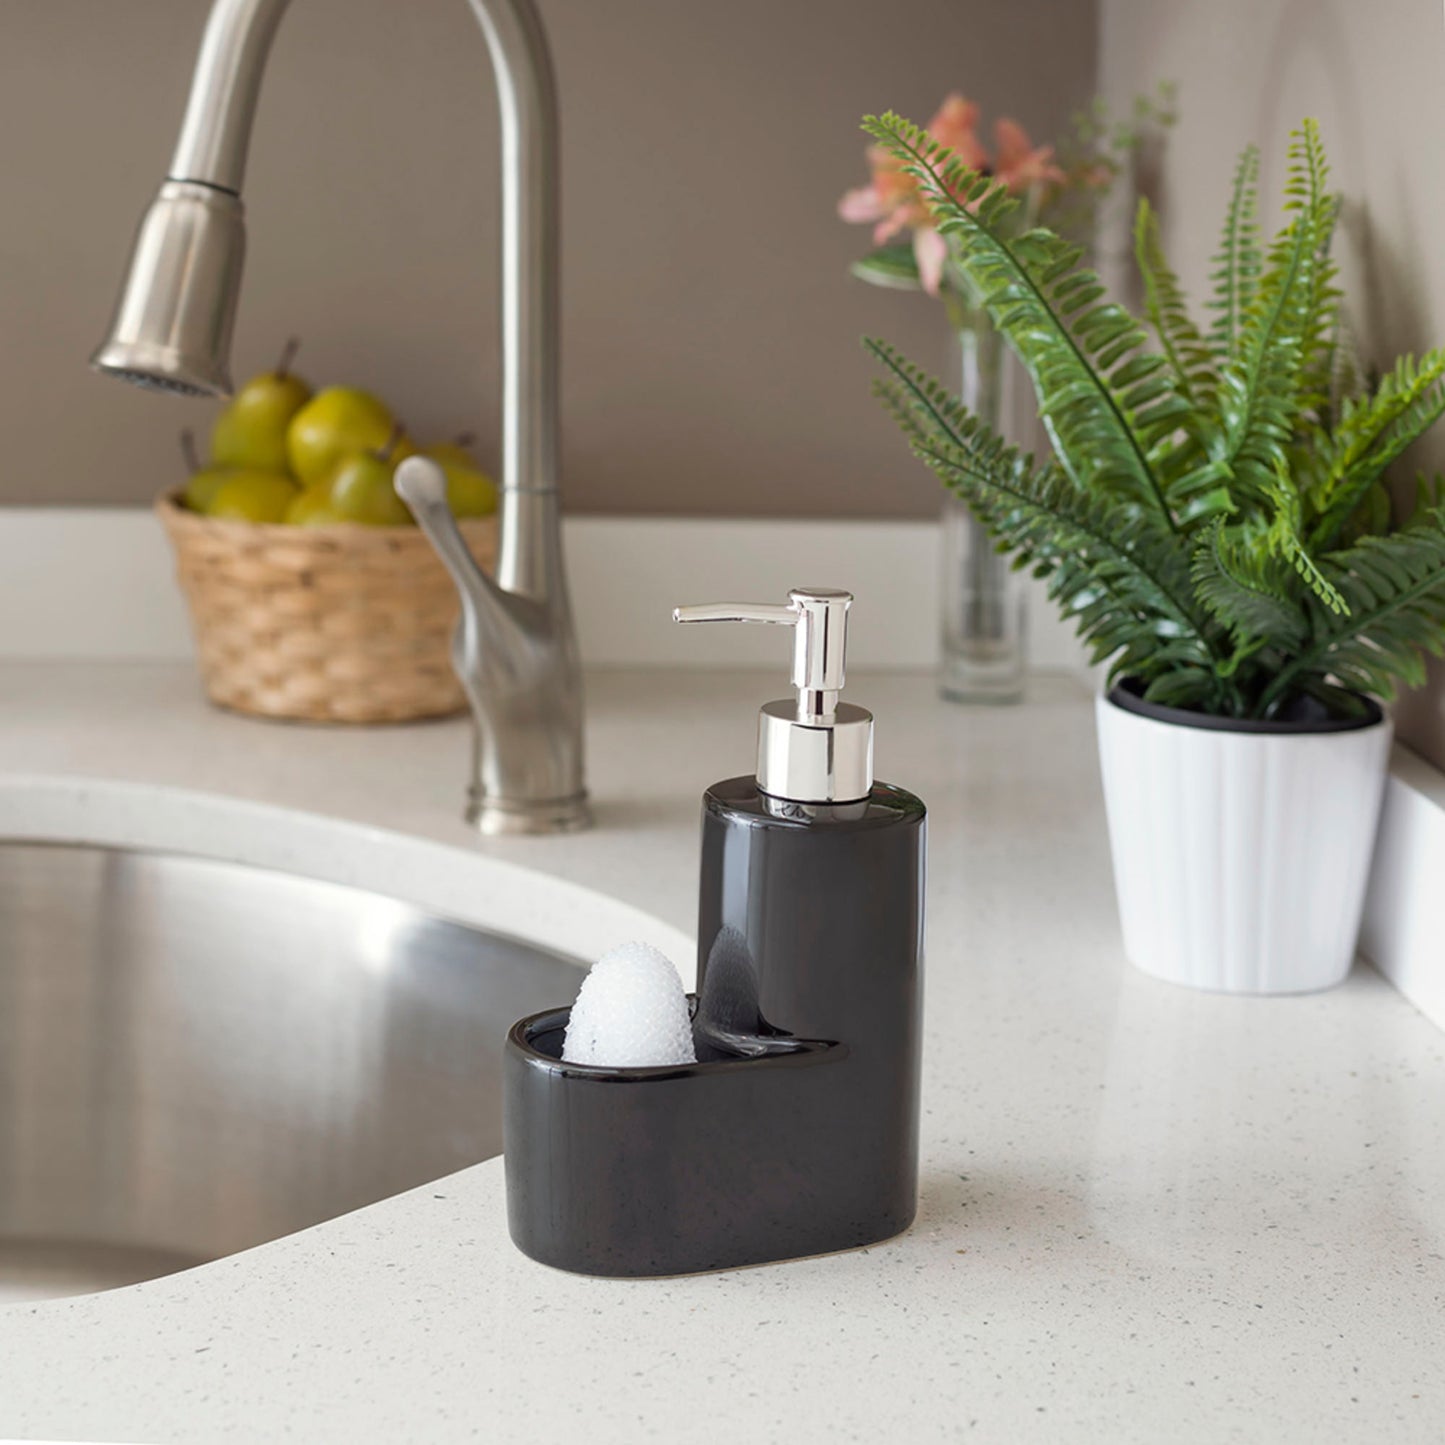 Ceramic Soap Dispenser with Sponge